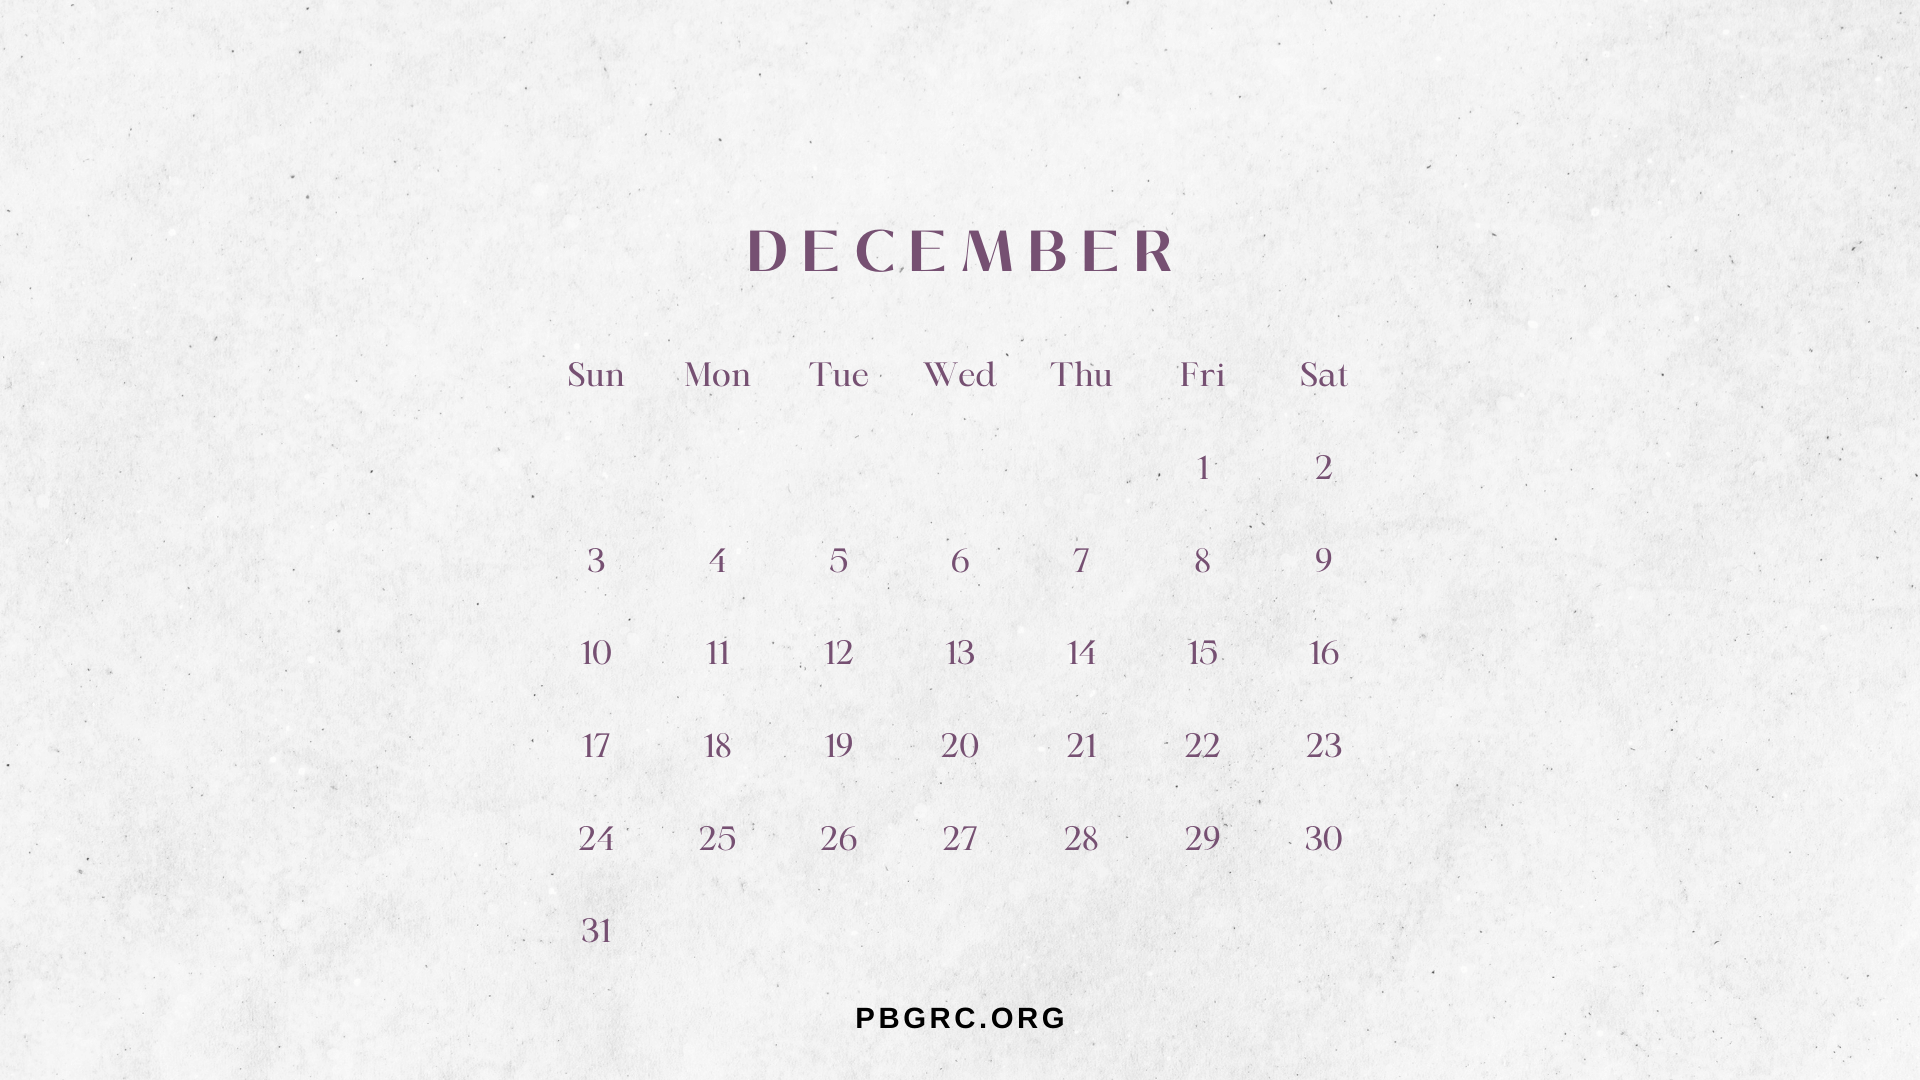 December 2023 Calendar Word